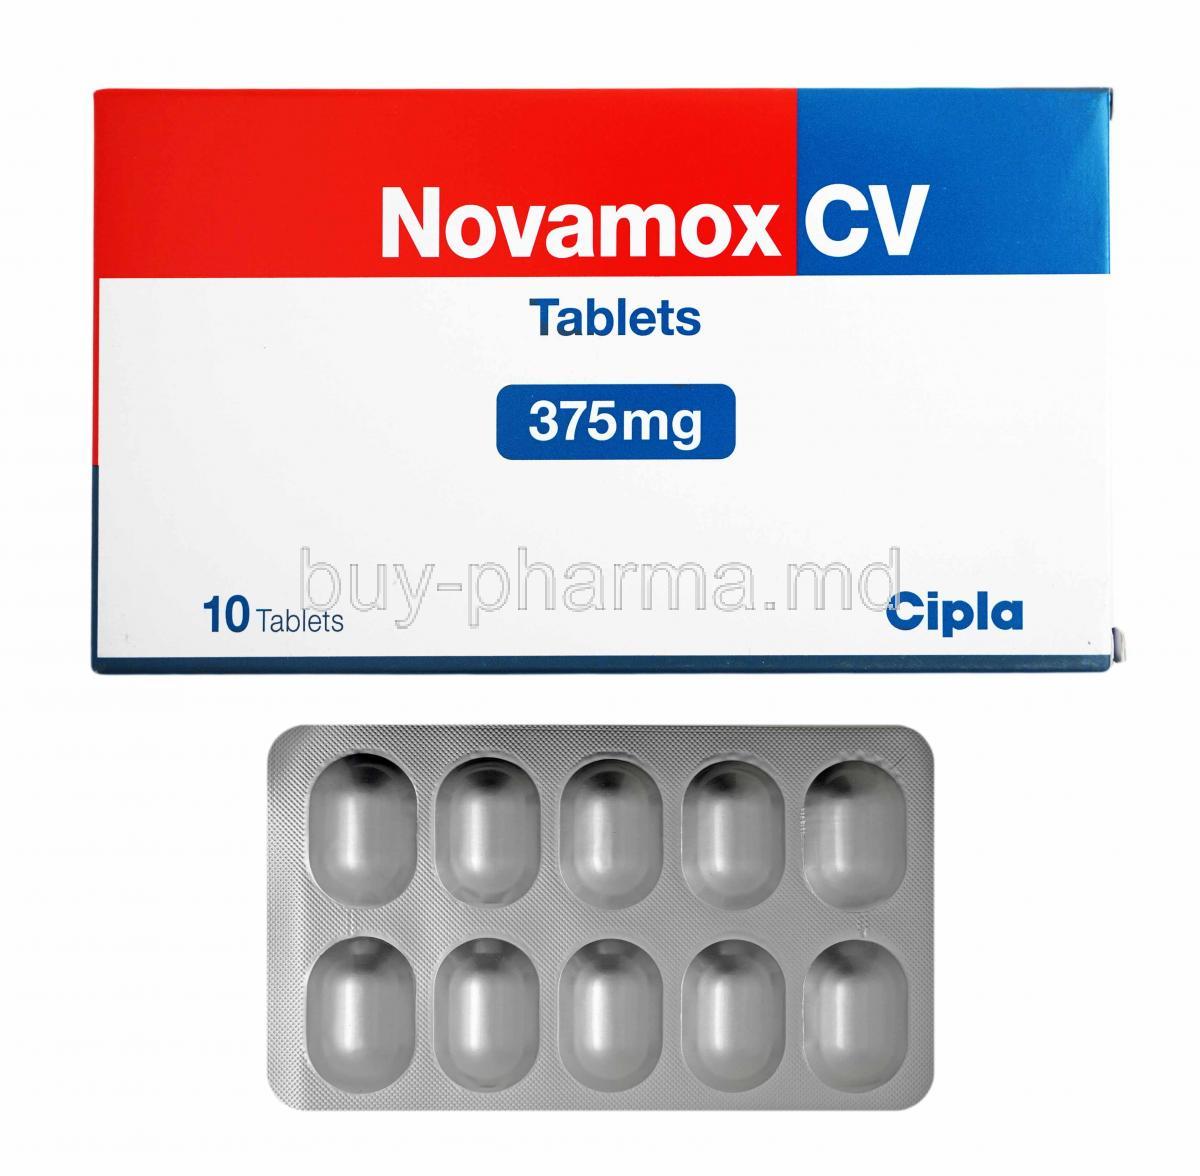 Novamox CV, Amoxycillin and Clavulanic Acid box and tablets